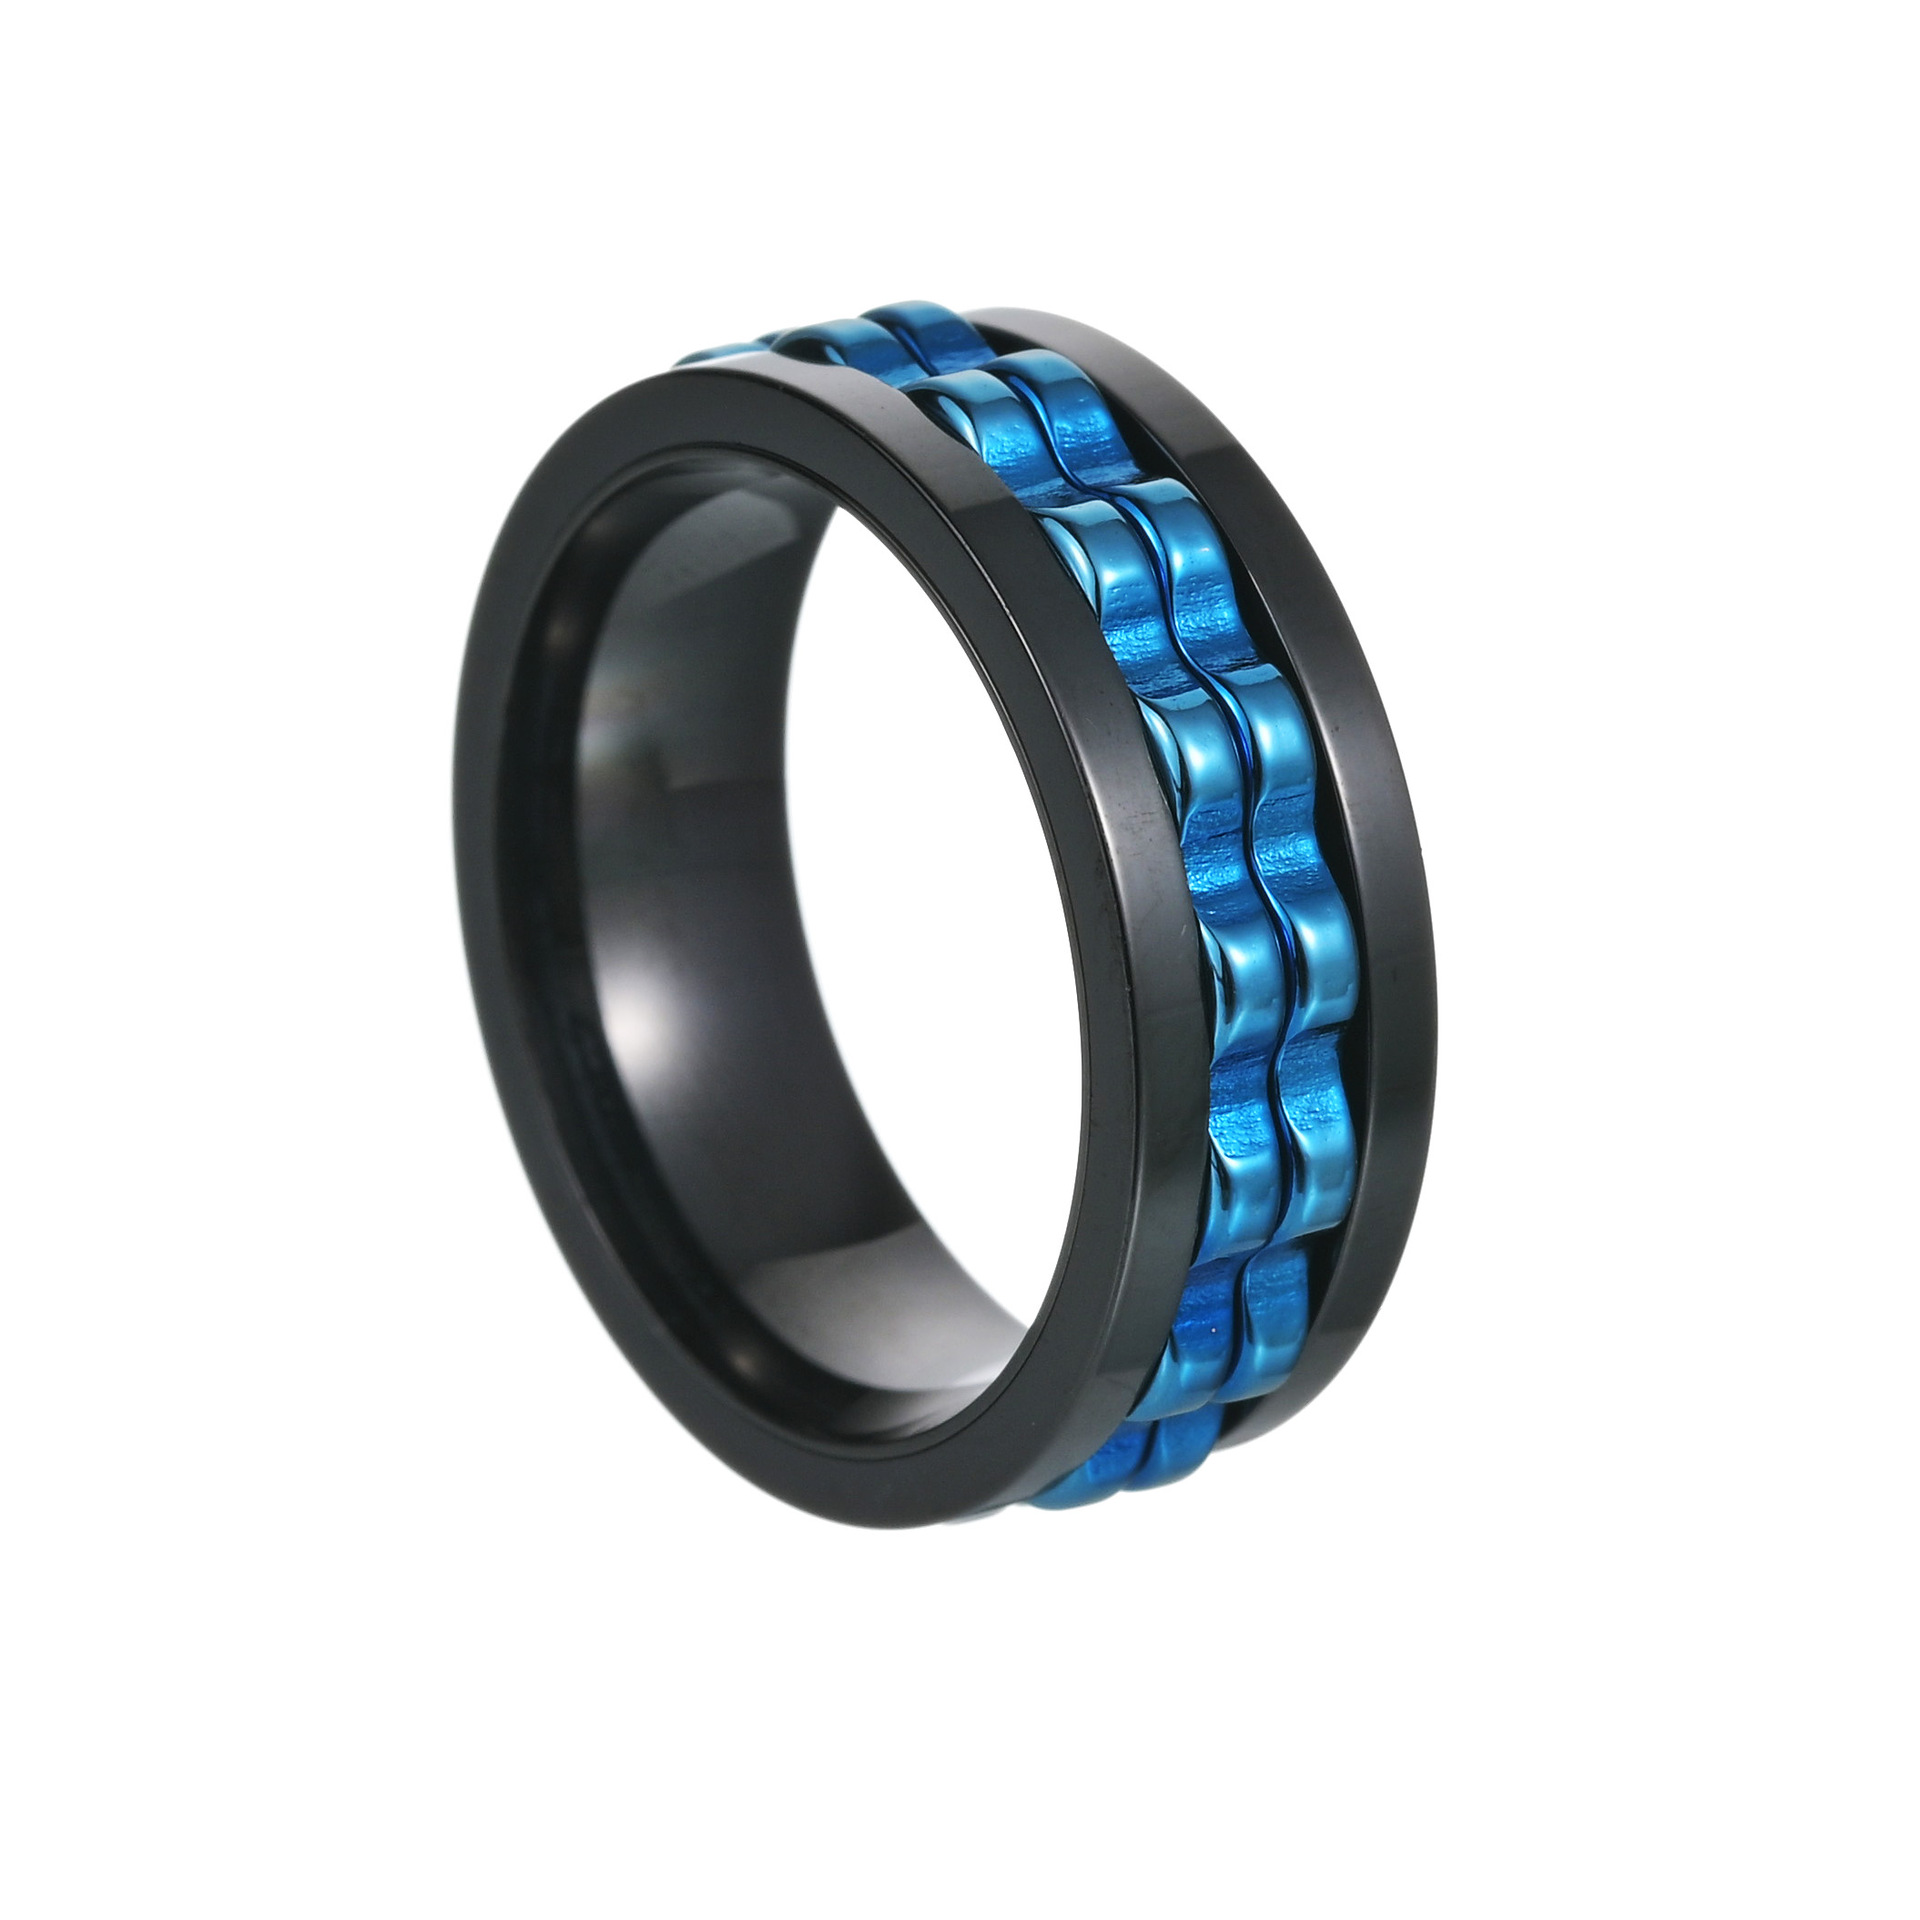 8:Black Ring   Blue Gear